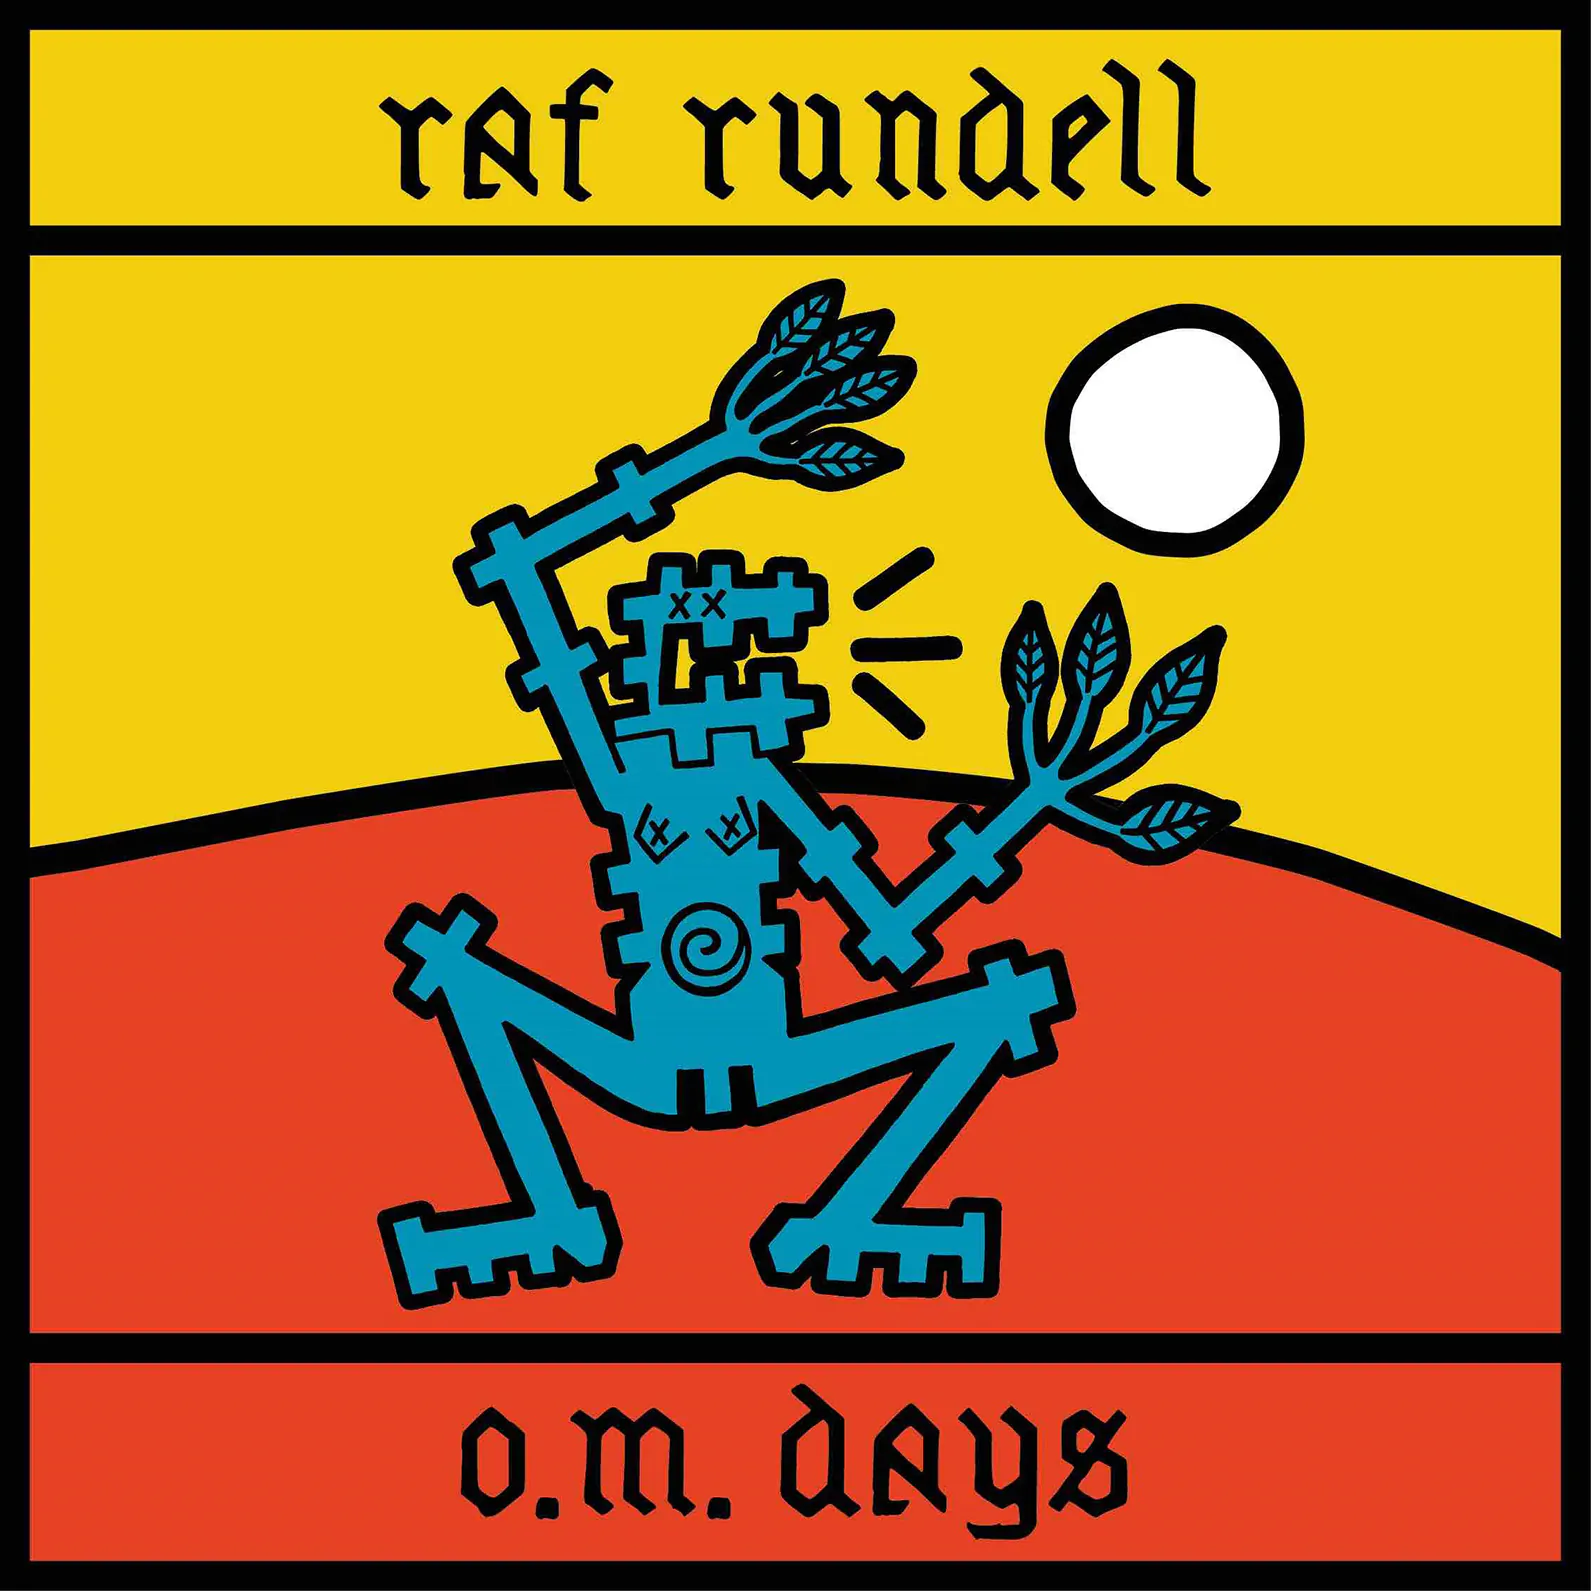 ALBUM REVIEW: Raf Rundell – O.M. Days